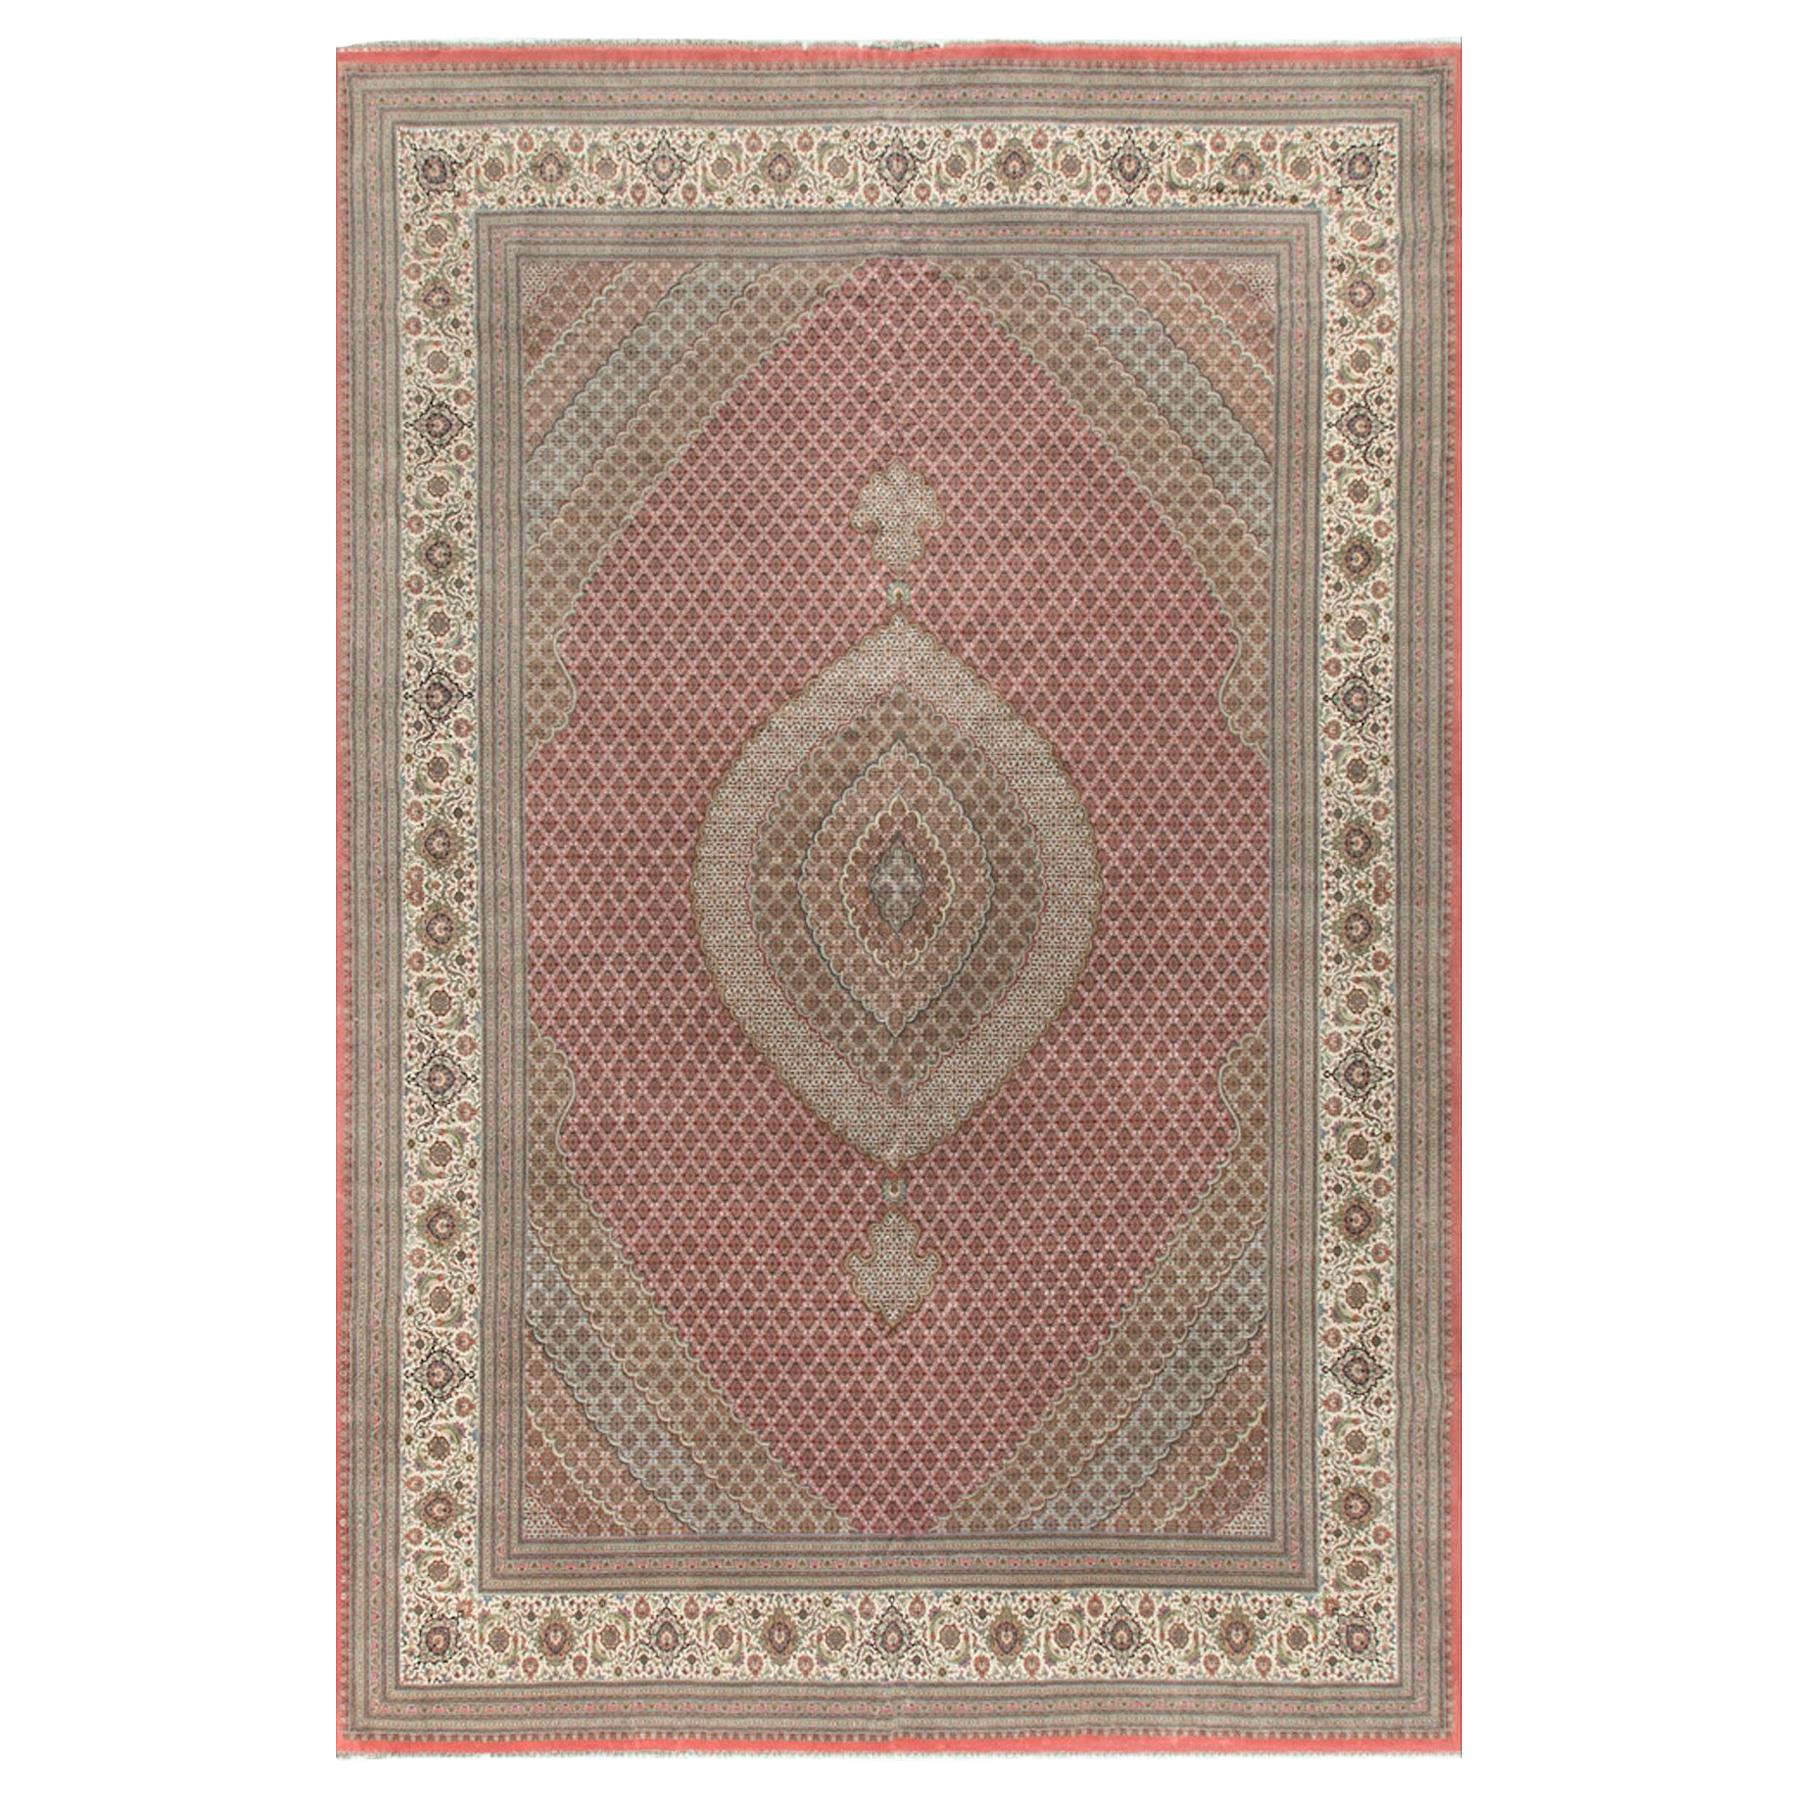 Vintage Fine Persian Tabriz Wool and Silk Rug, 12'9" x 19'4".